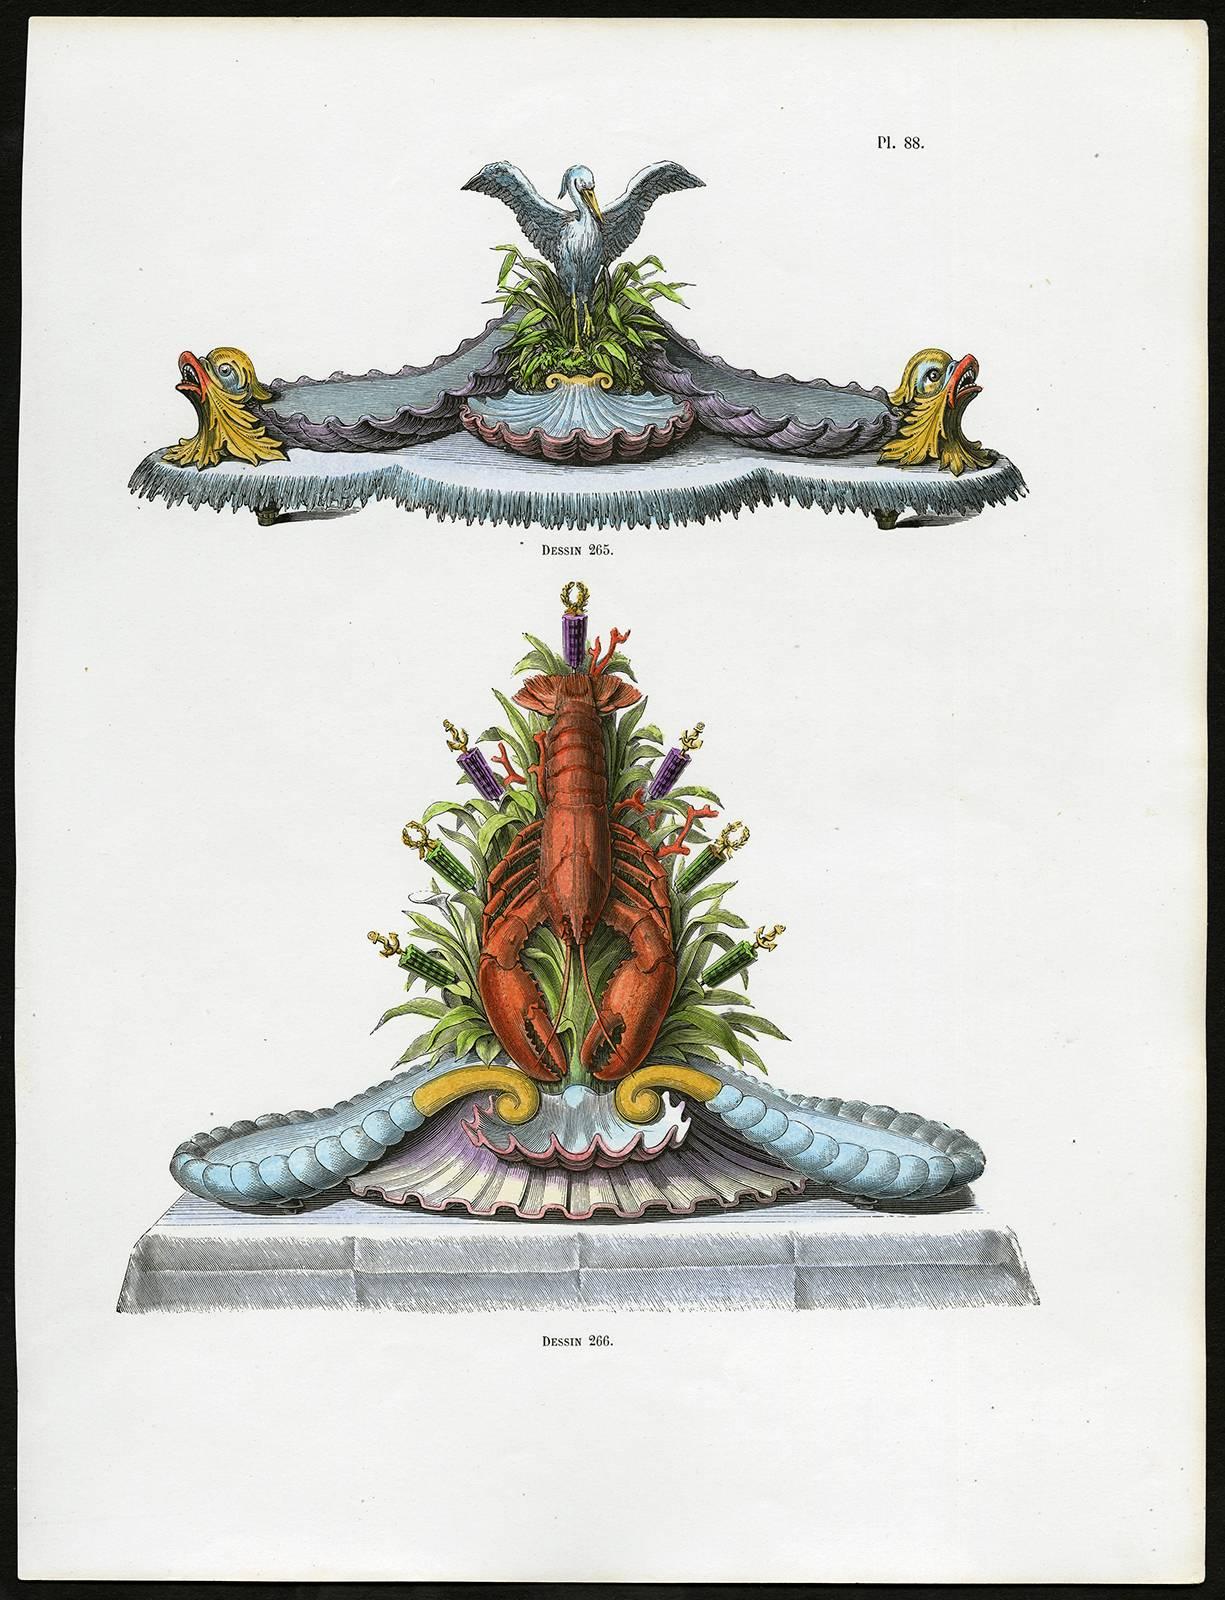 Urbain Dubois Print - Untitled - Plate 88, Dessins 265-266: 265 - Luxury table decoration.